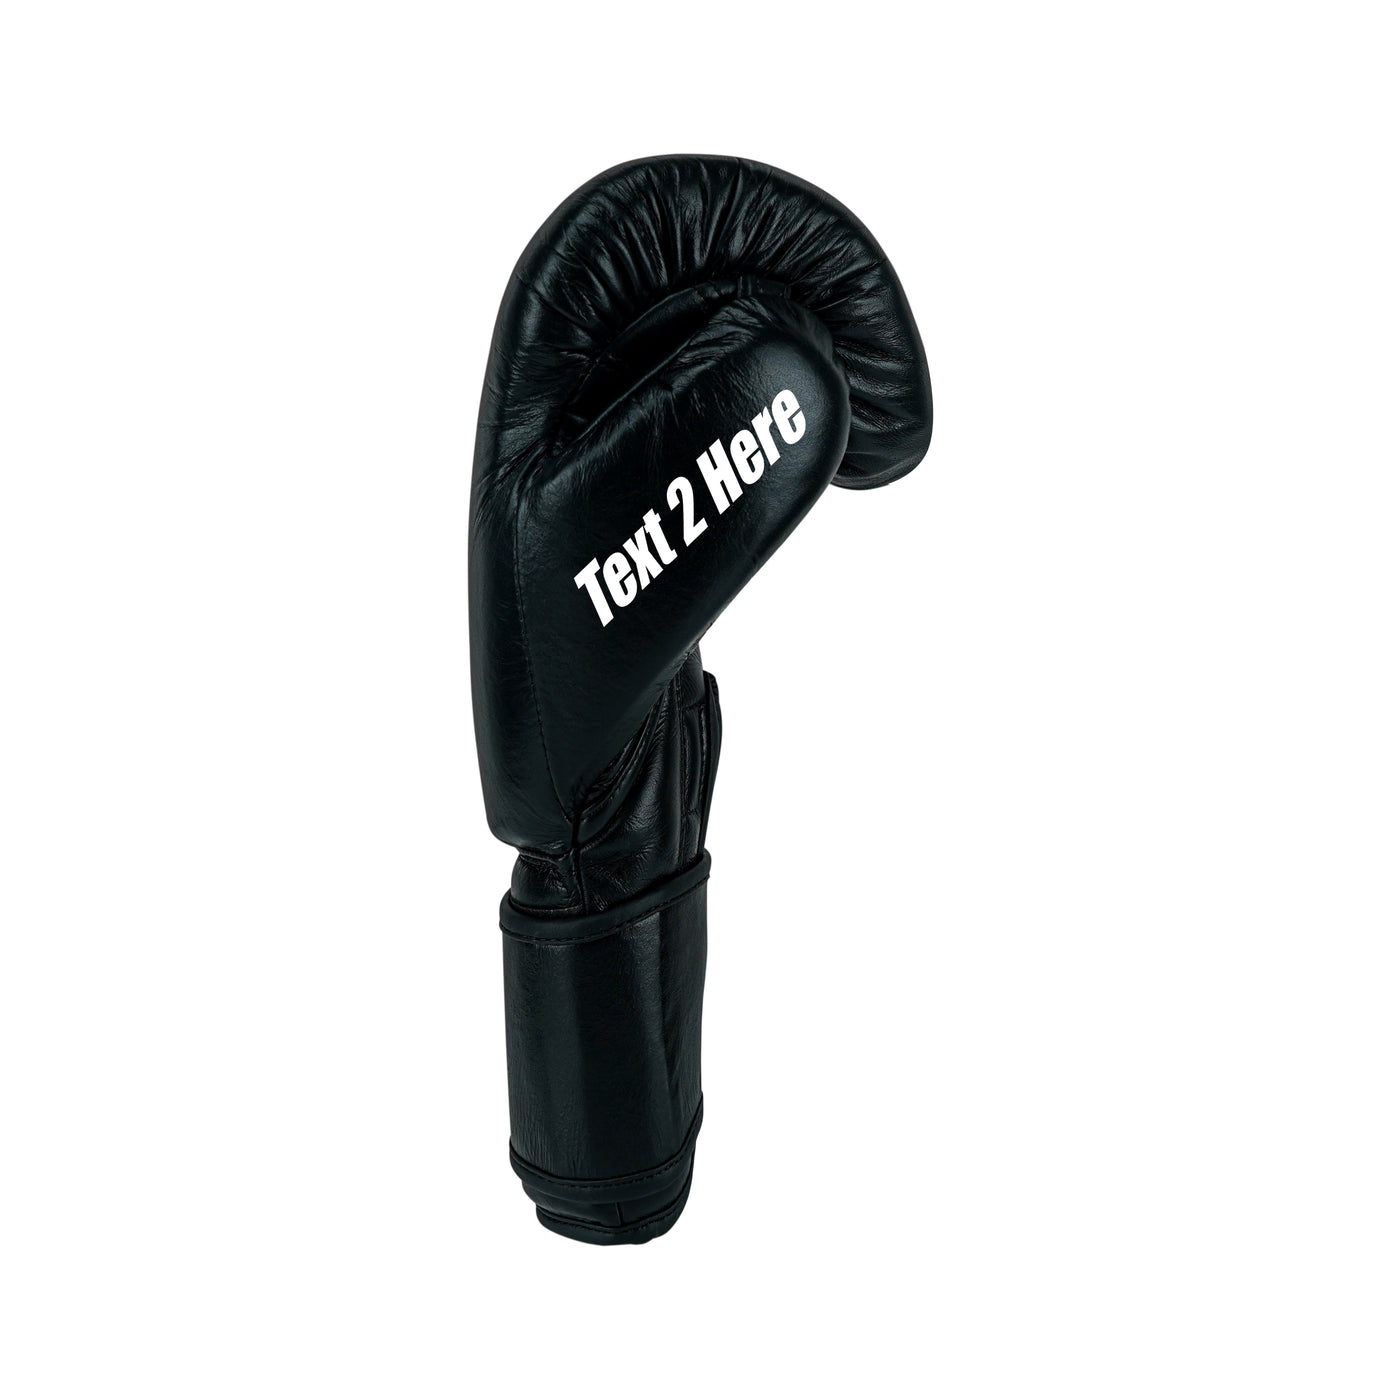 Custom Black Genuine Leather Boxing Training Gloves  C31